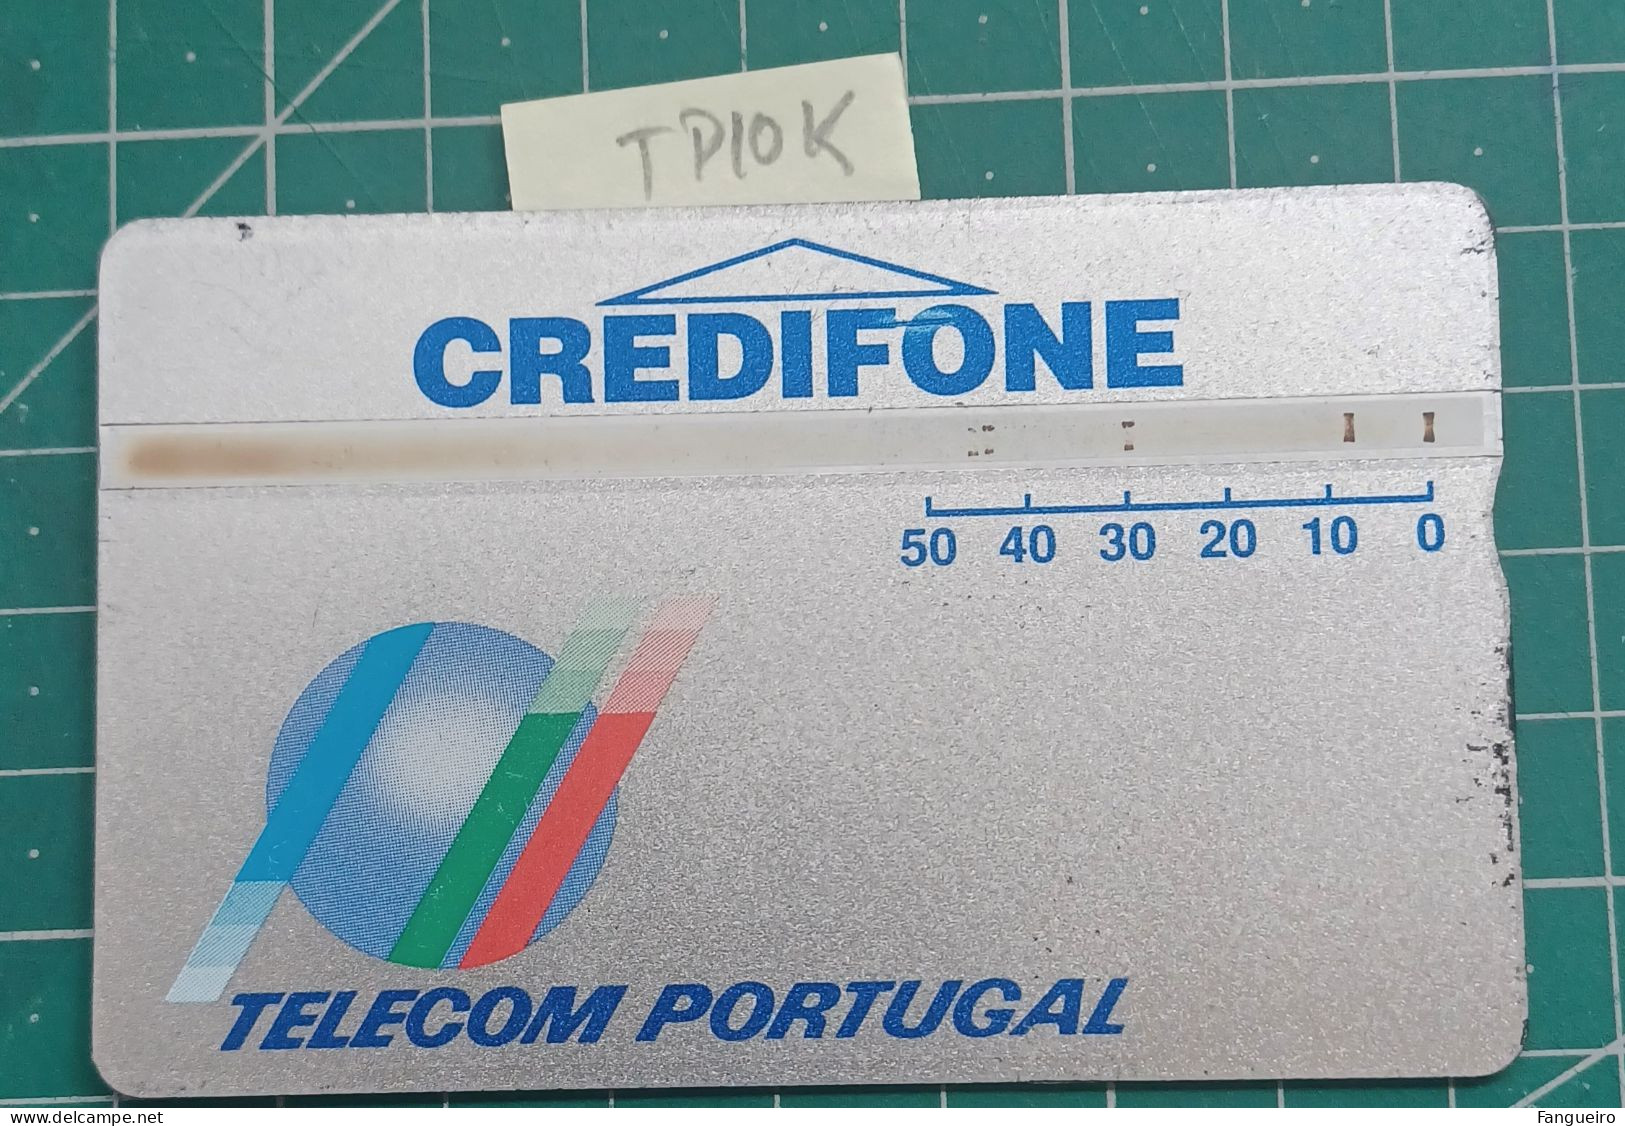 PORTUGAL PHONECARD USED TP10K PRATA - Portogallo